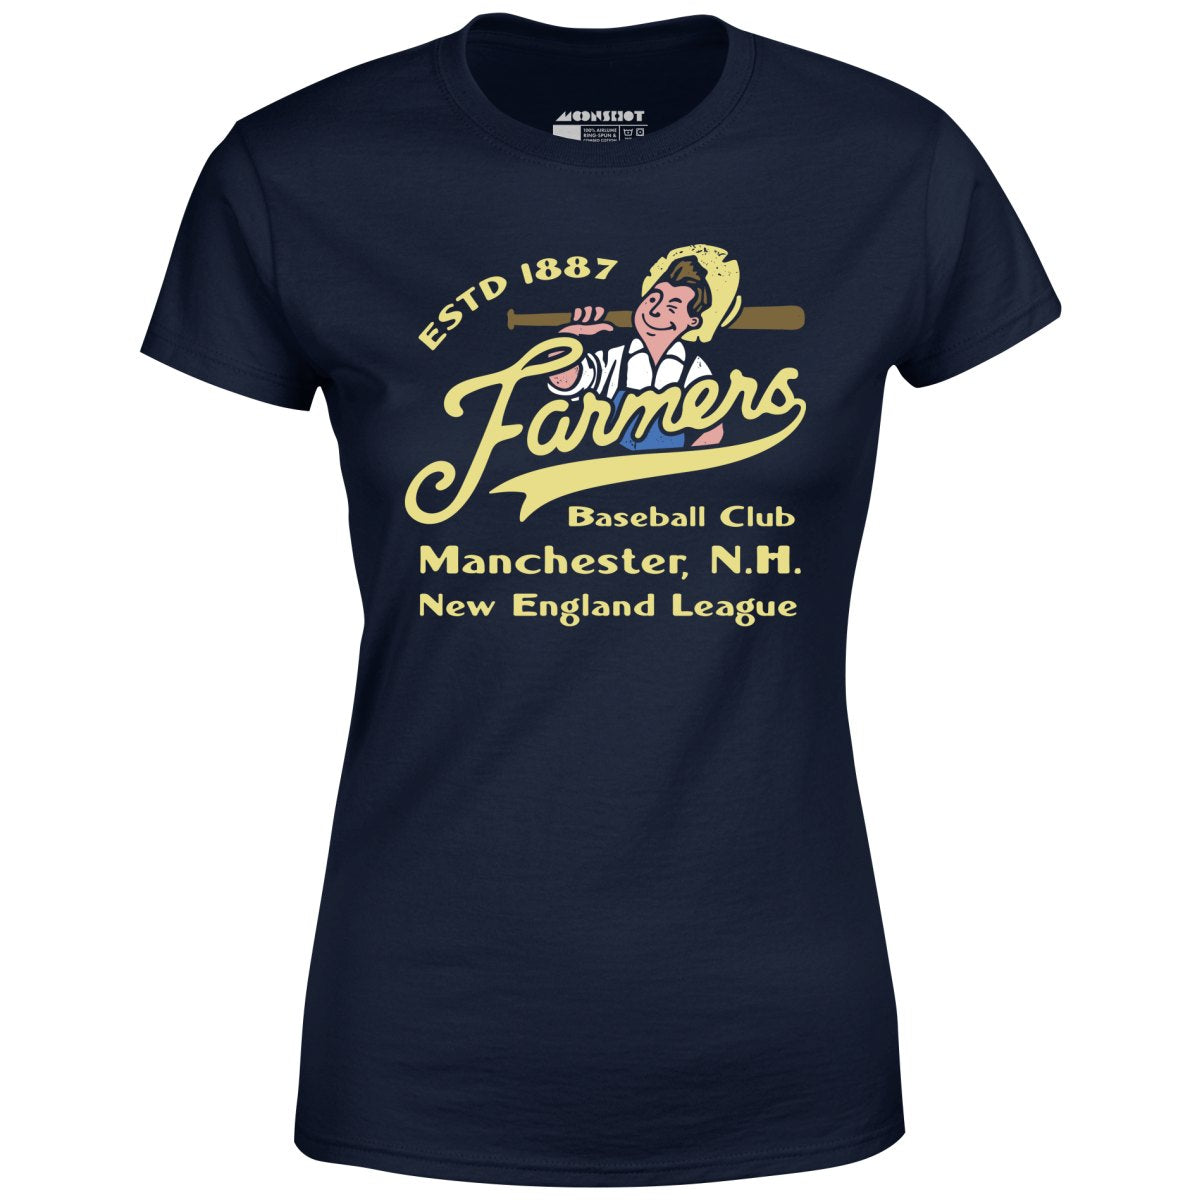 Manchester Farmers - New Hampshire - Vintage Defunct Baseball Teams - Women's T-Shirt